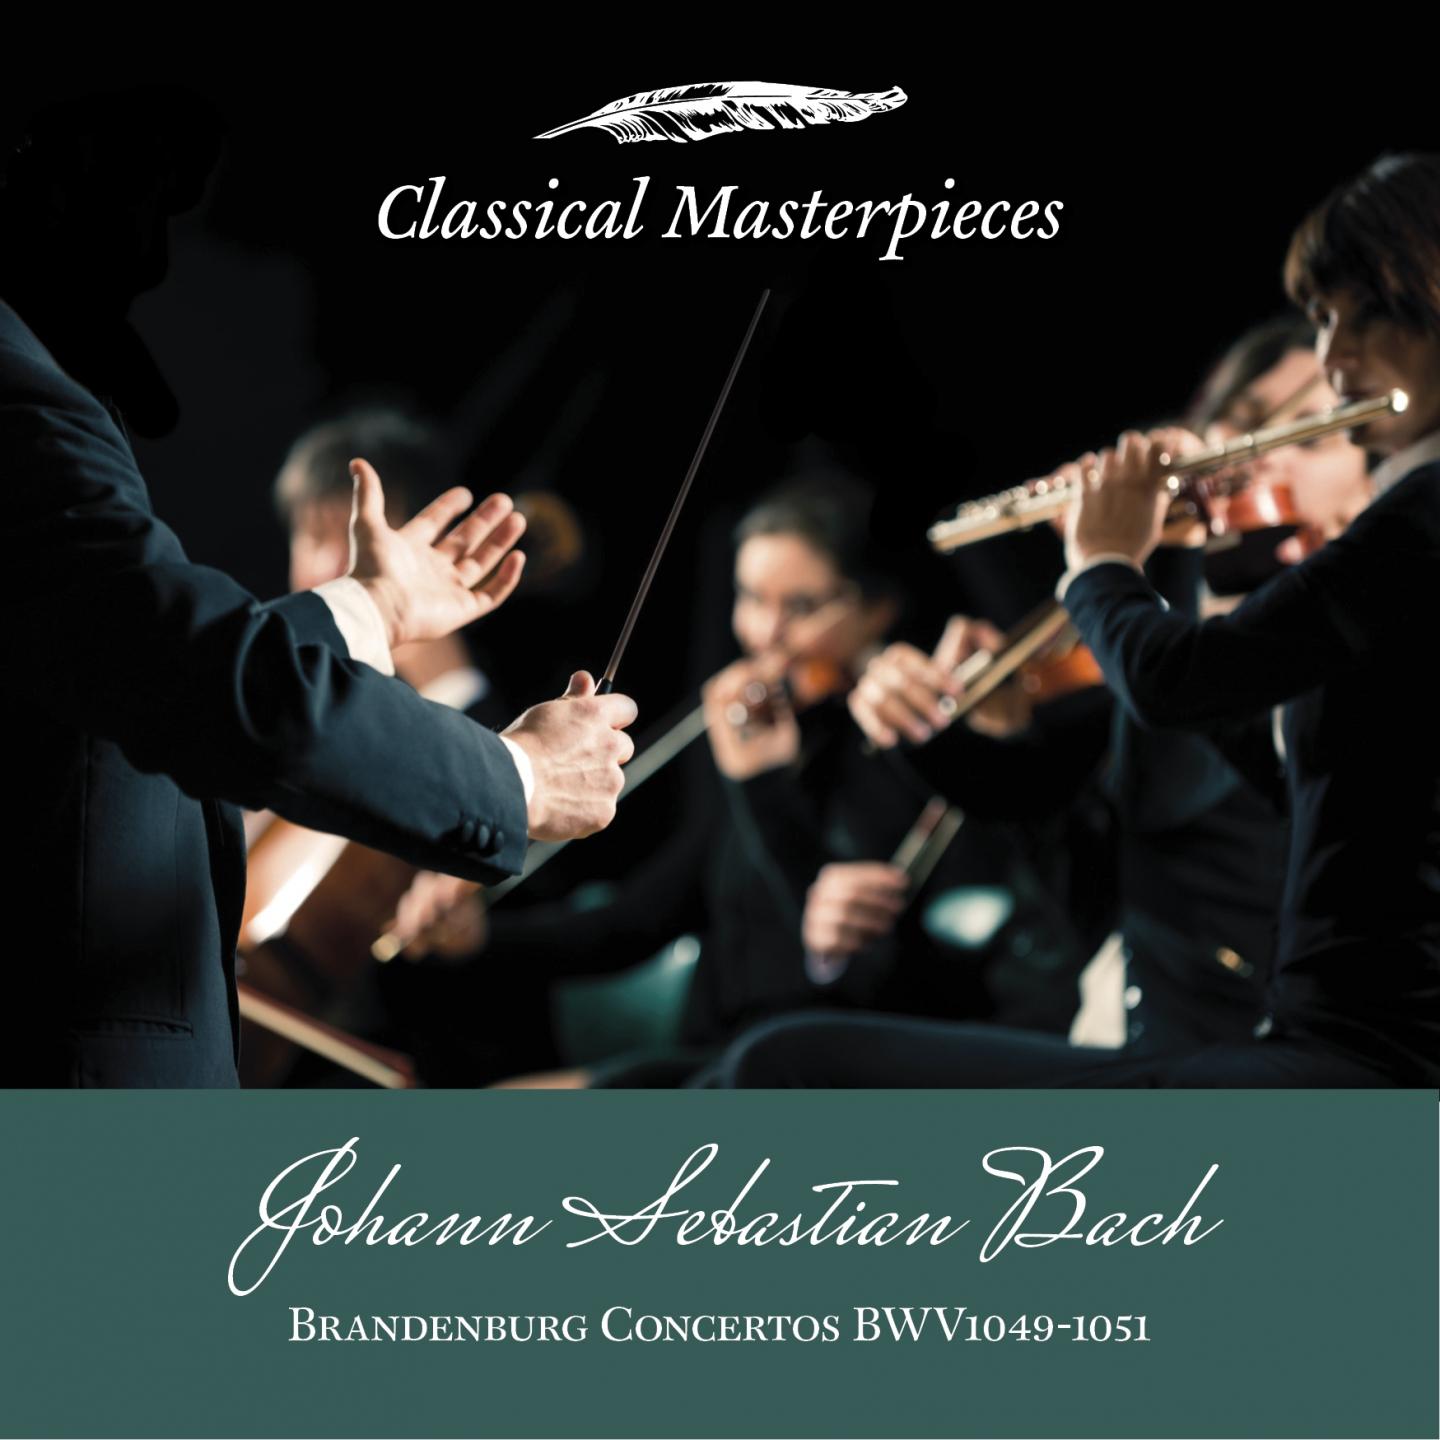 Brandenburg Concerto VI in B Flat Major, BWV1051: Adagio Ma Non Tanto